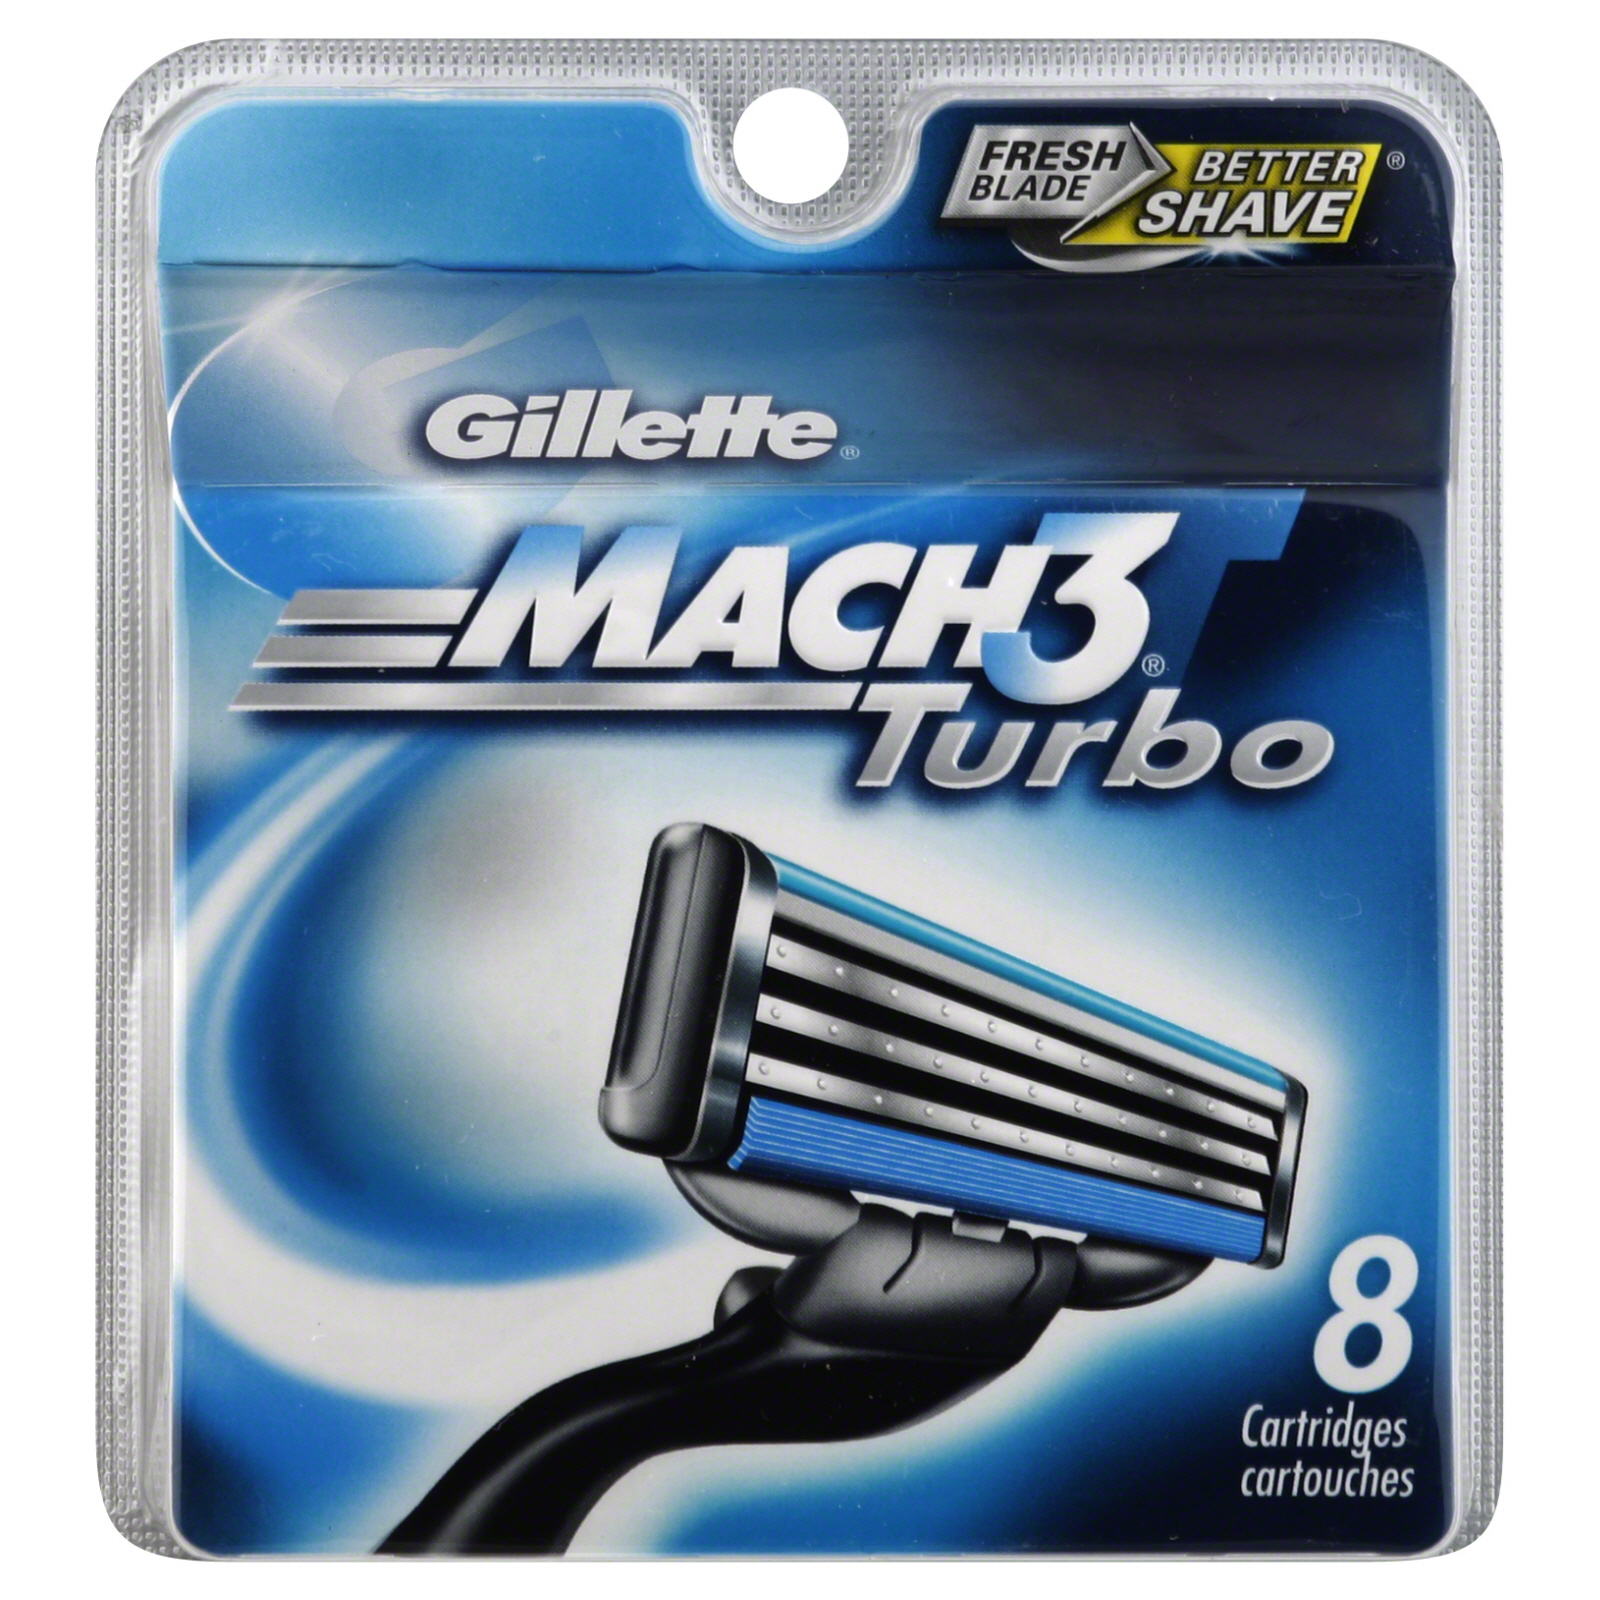 Gillette Mach3 Turbo Cartridges, 8 cartridges   Beauty   Shaving